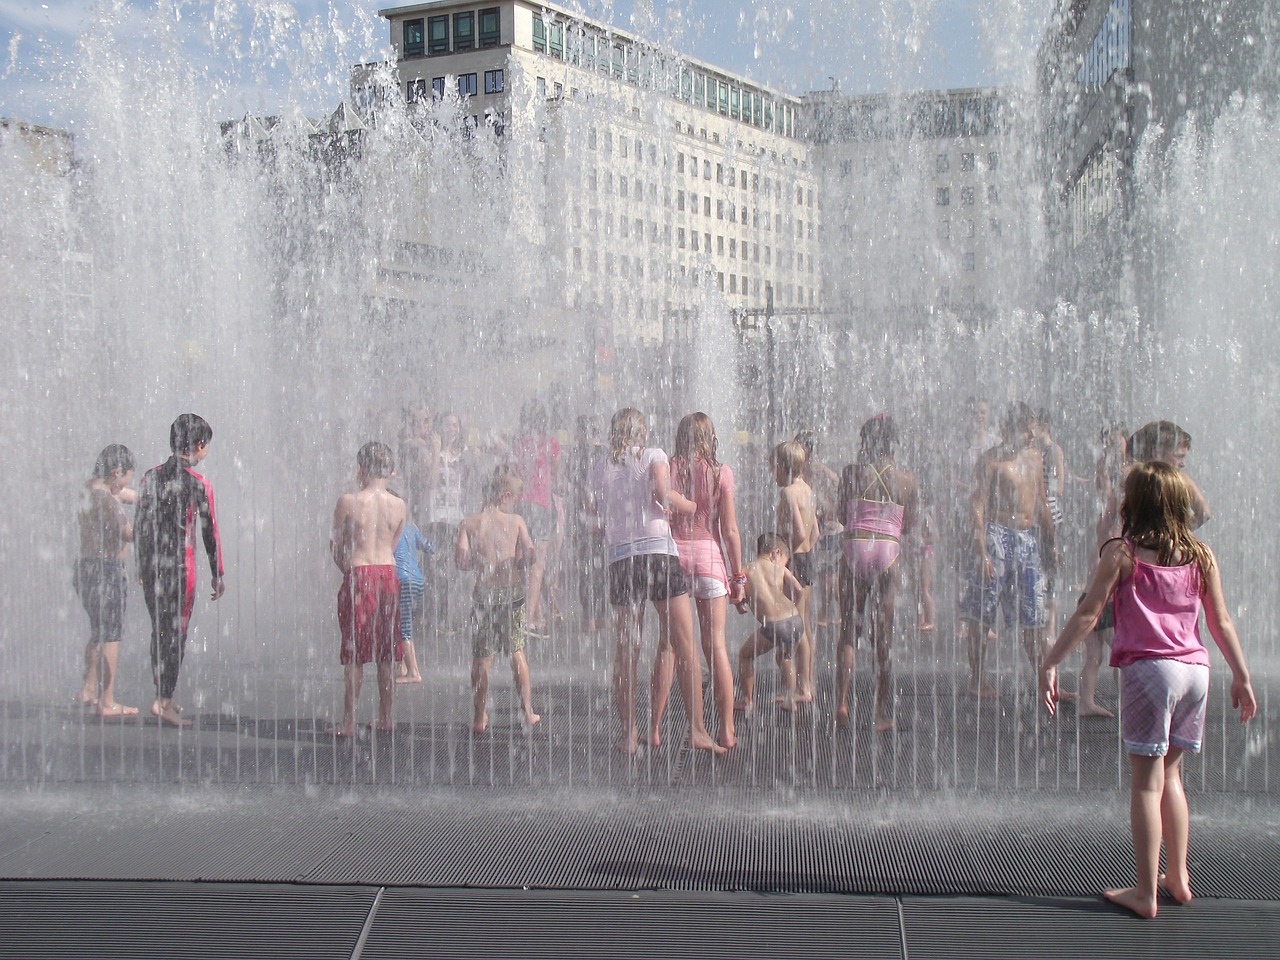 children playing water free photo